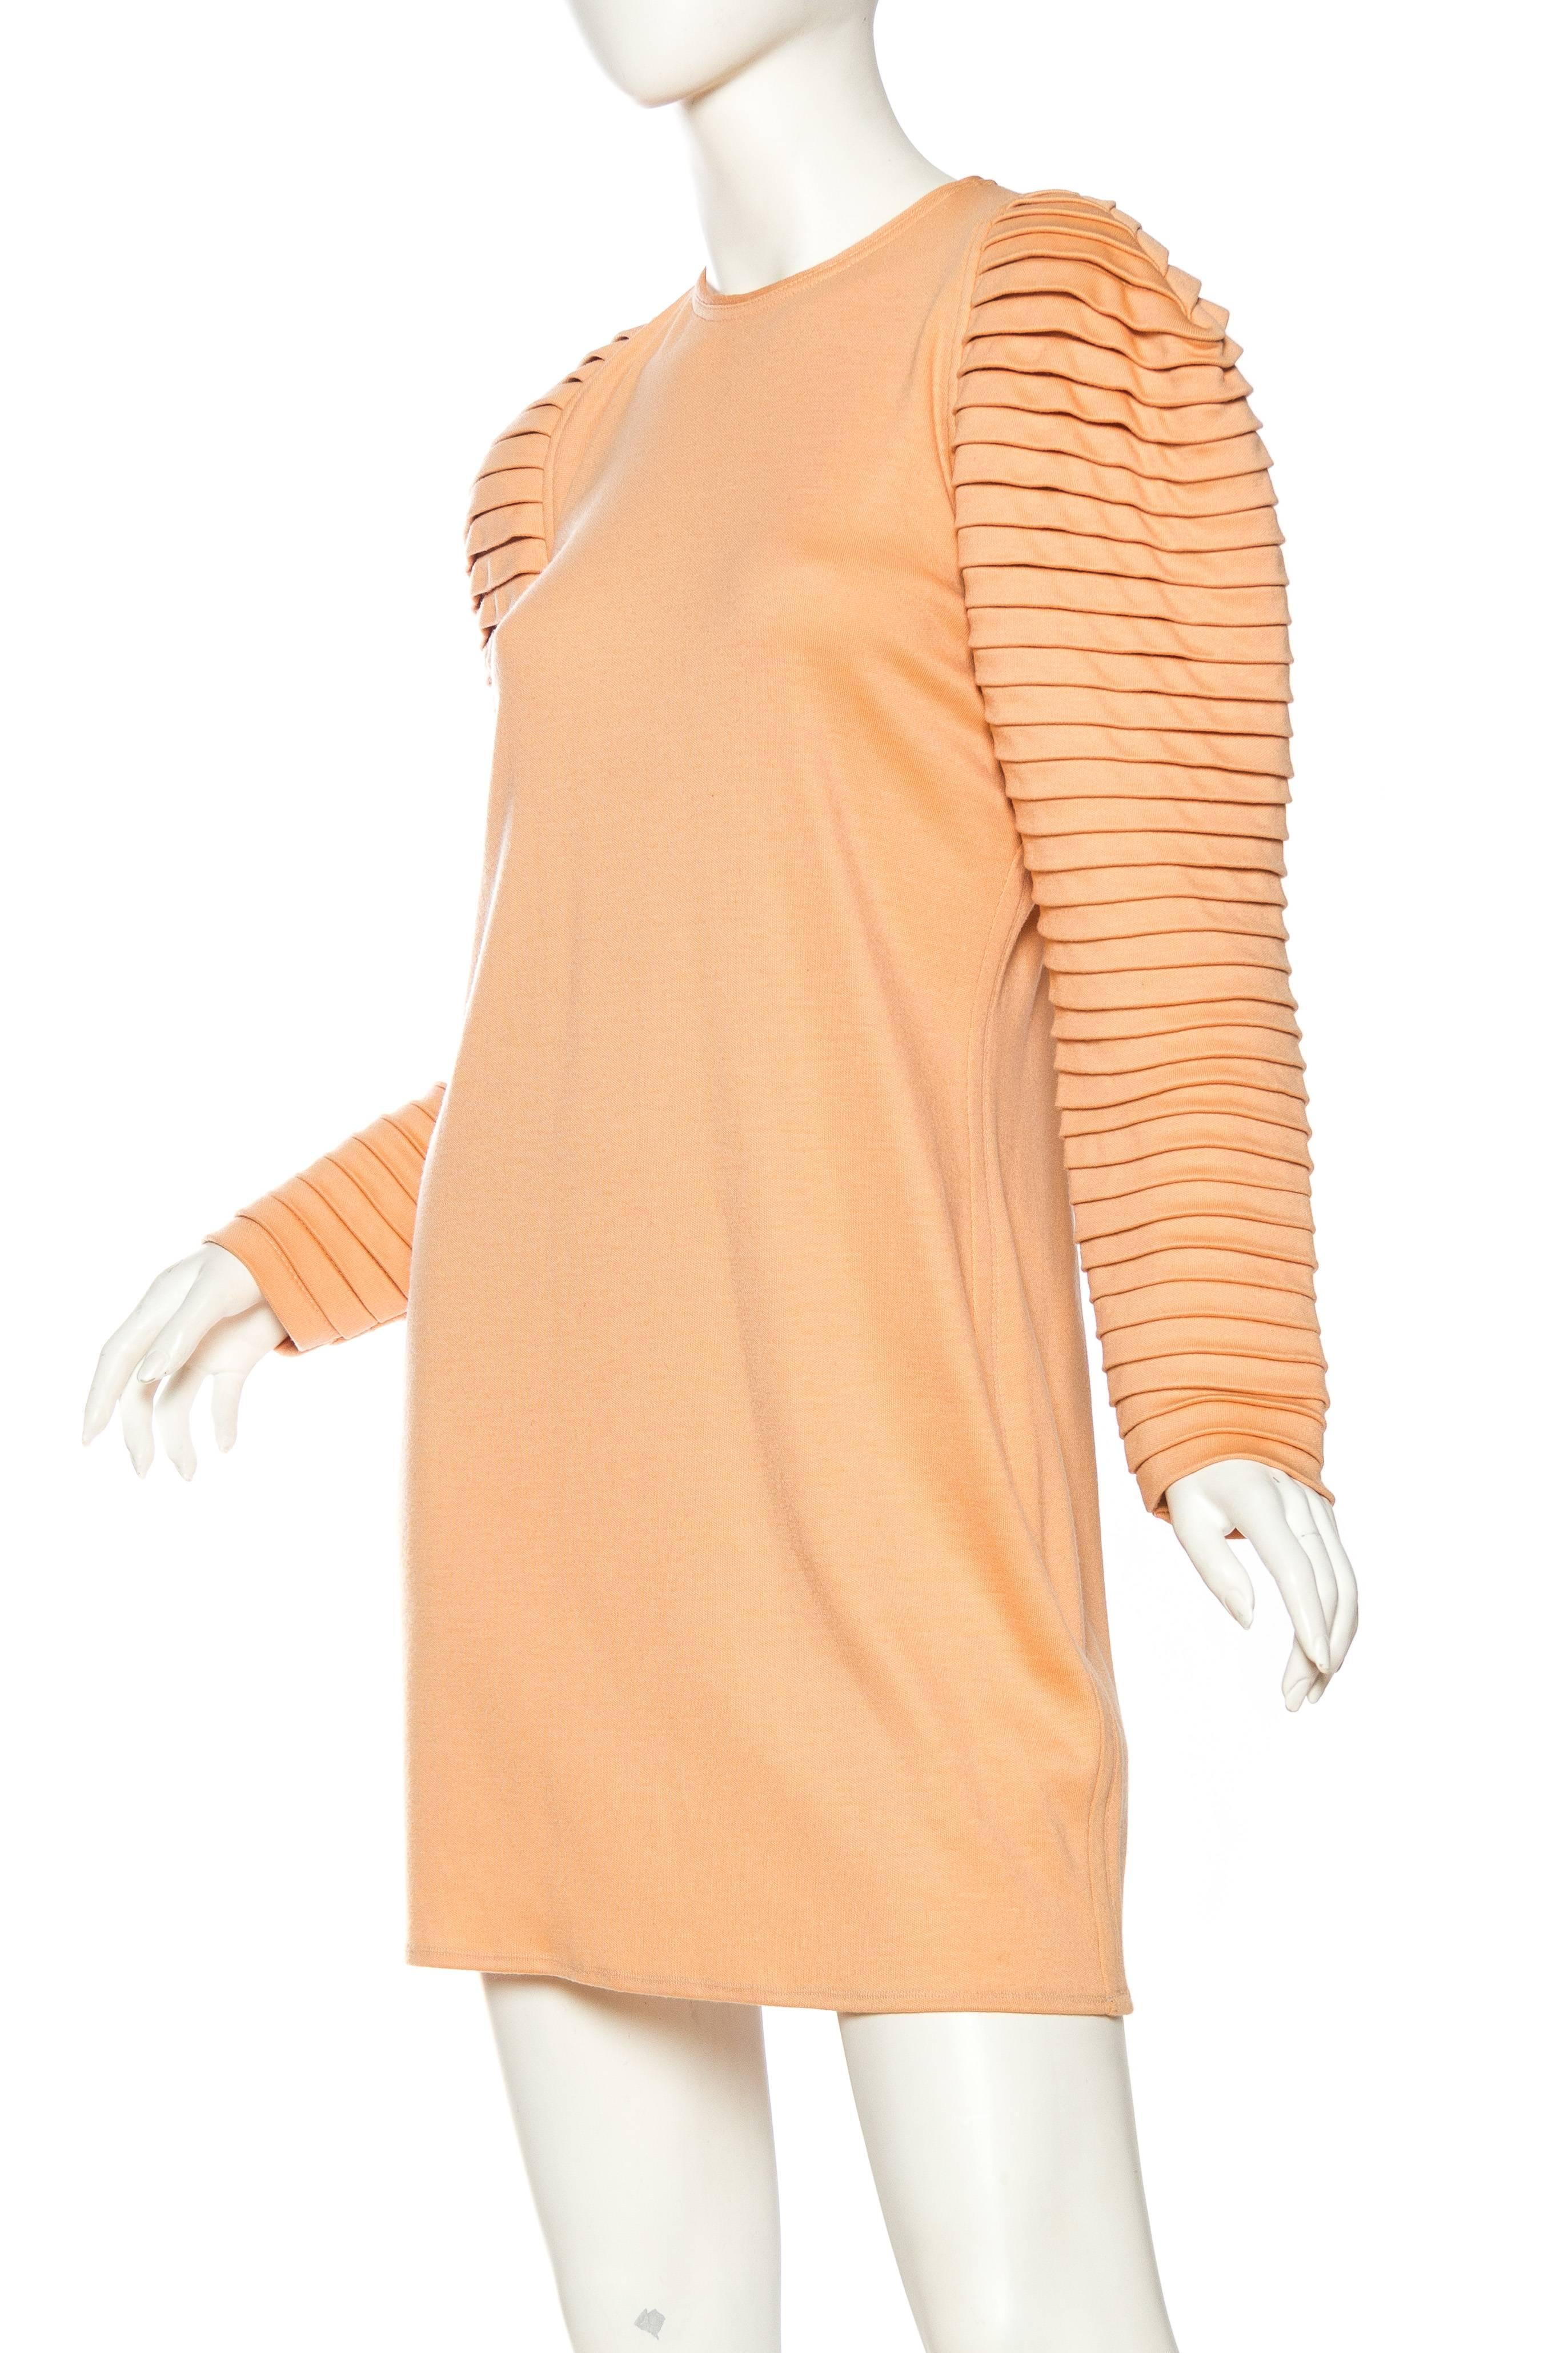 1980s GIANNI VERSACE FOR GENNY Peach Wool Jersey Cozy Long Sleeve Mini Dress 2